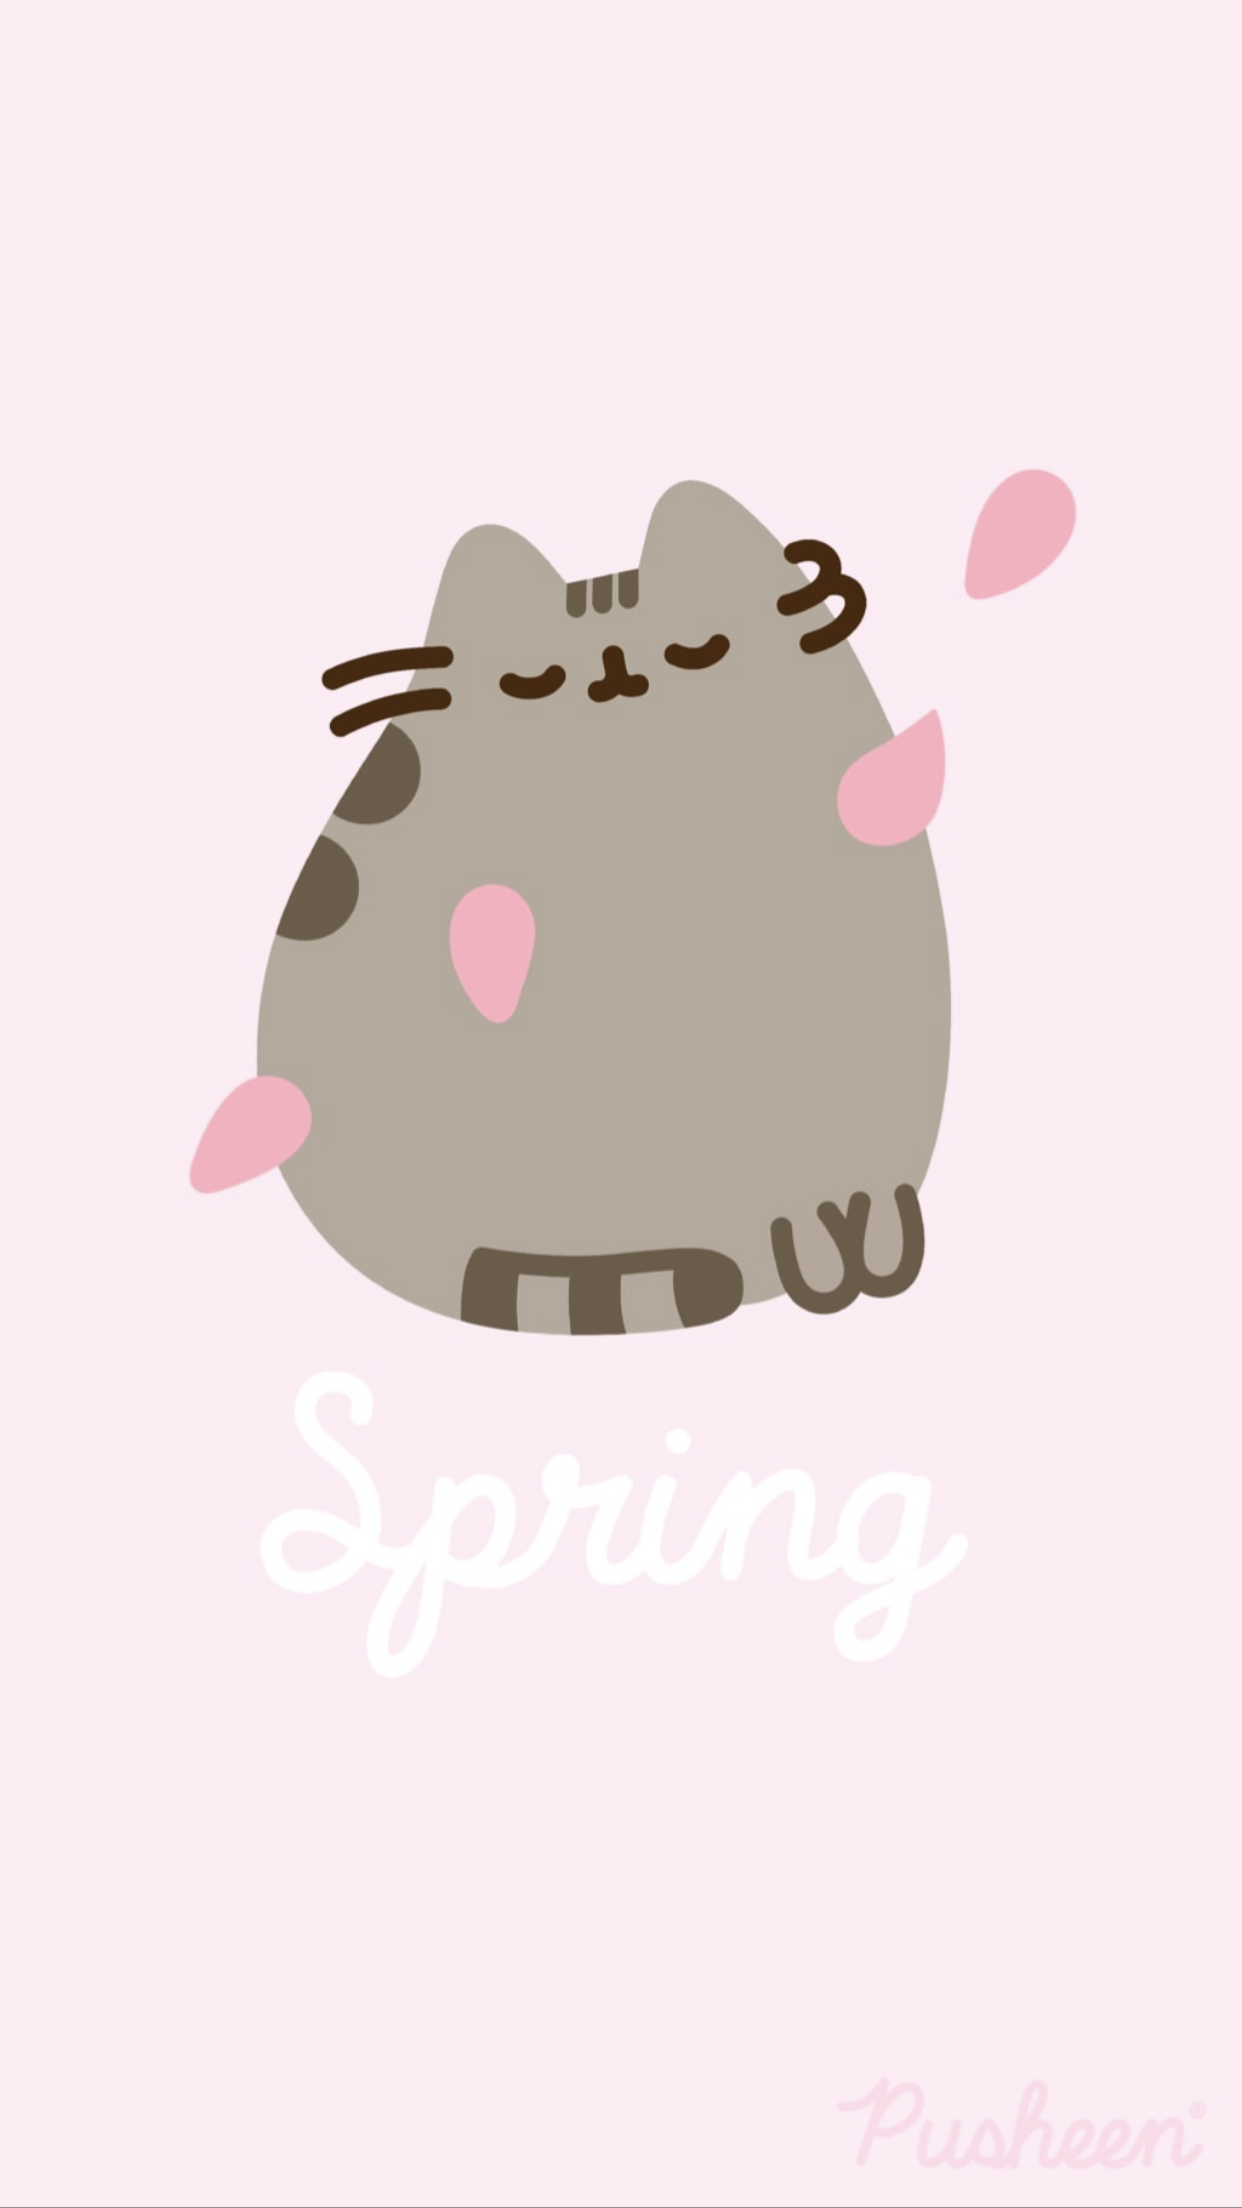 Pusheen the cat iphone wallpaper background spring. Pusheen cute